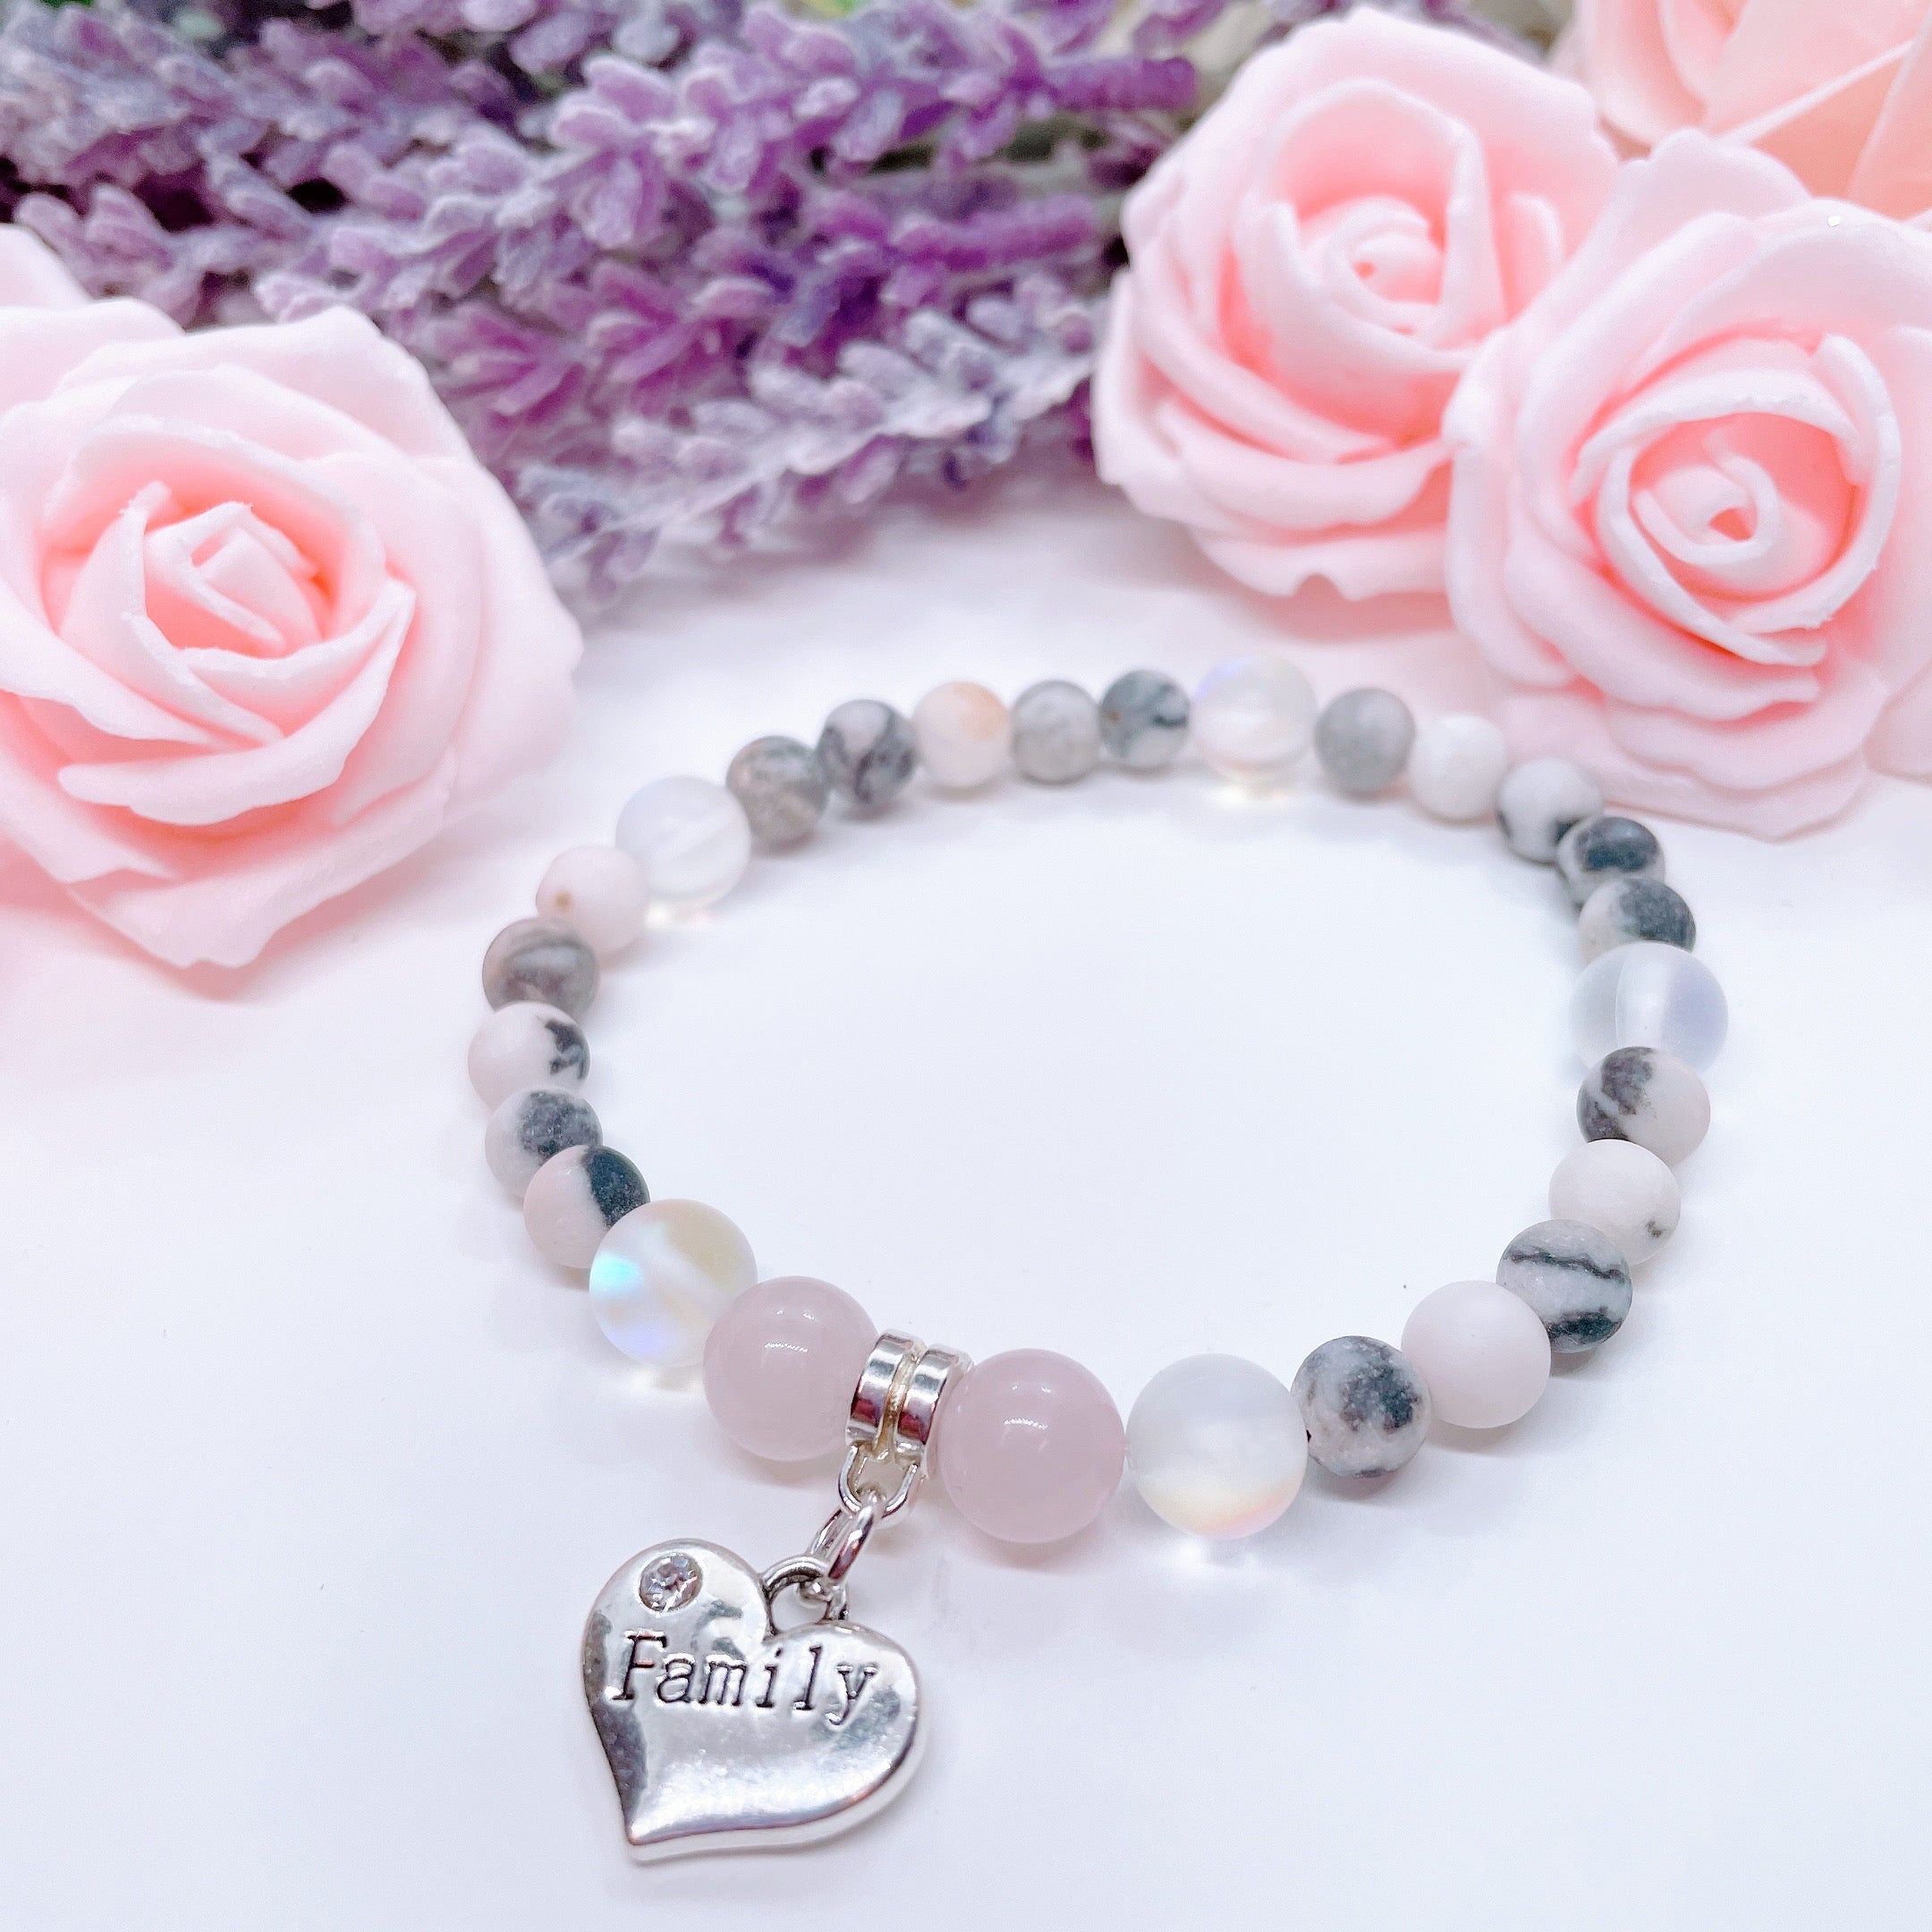 Family Heart Companion Charm Bracelet Rose Quartz